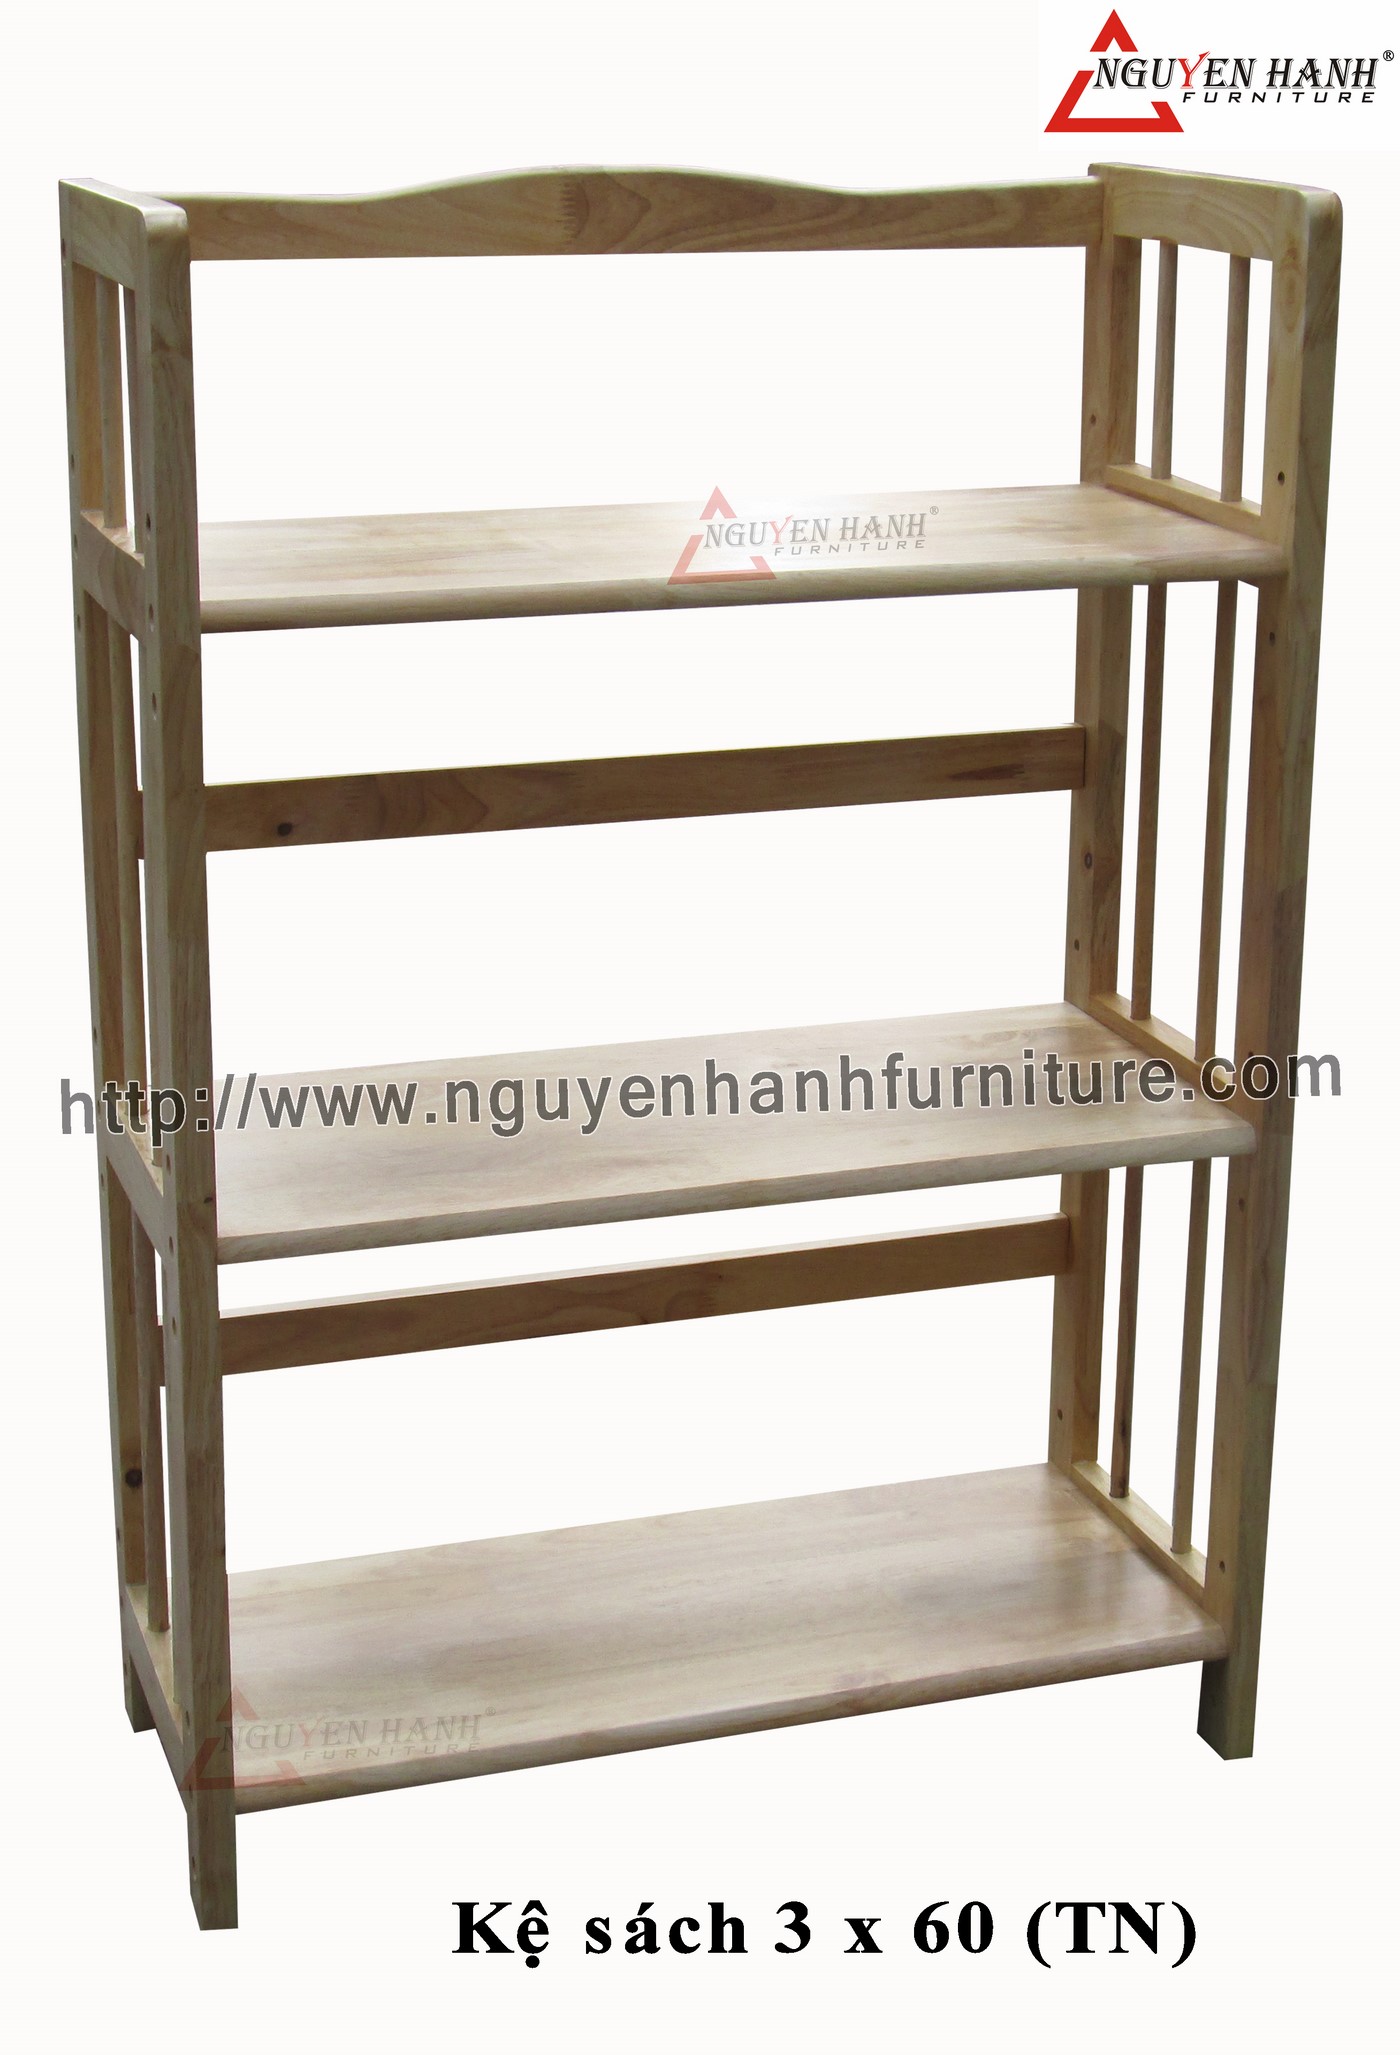 Name product: Triple storey Adjustable Bookshelf 60 (natural) - Dimensions: 63 x 28 x 90 (H) - Description: Wood natural rubber